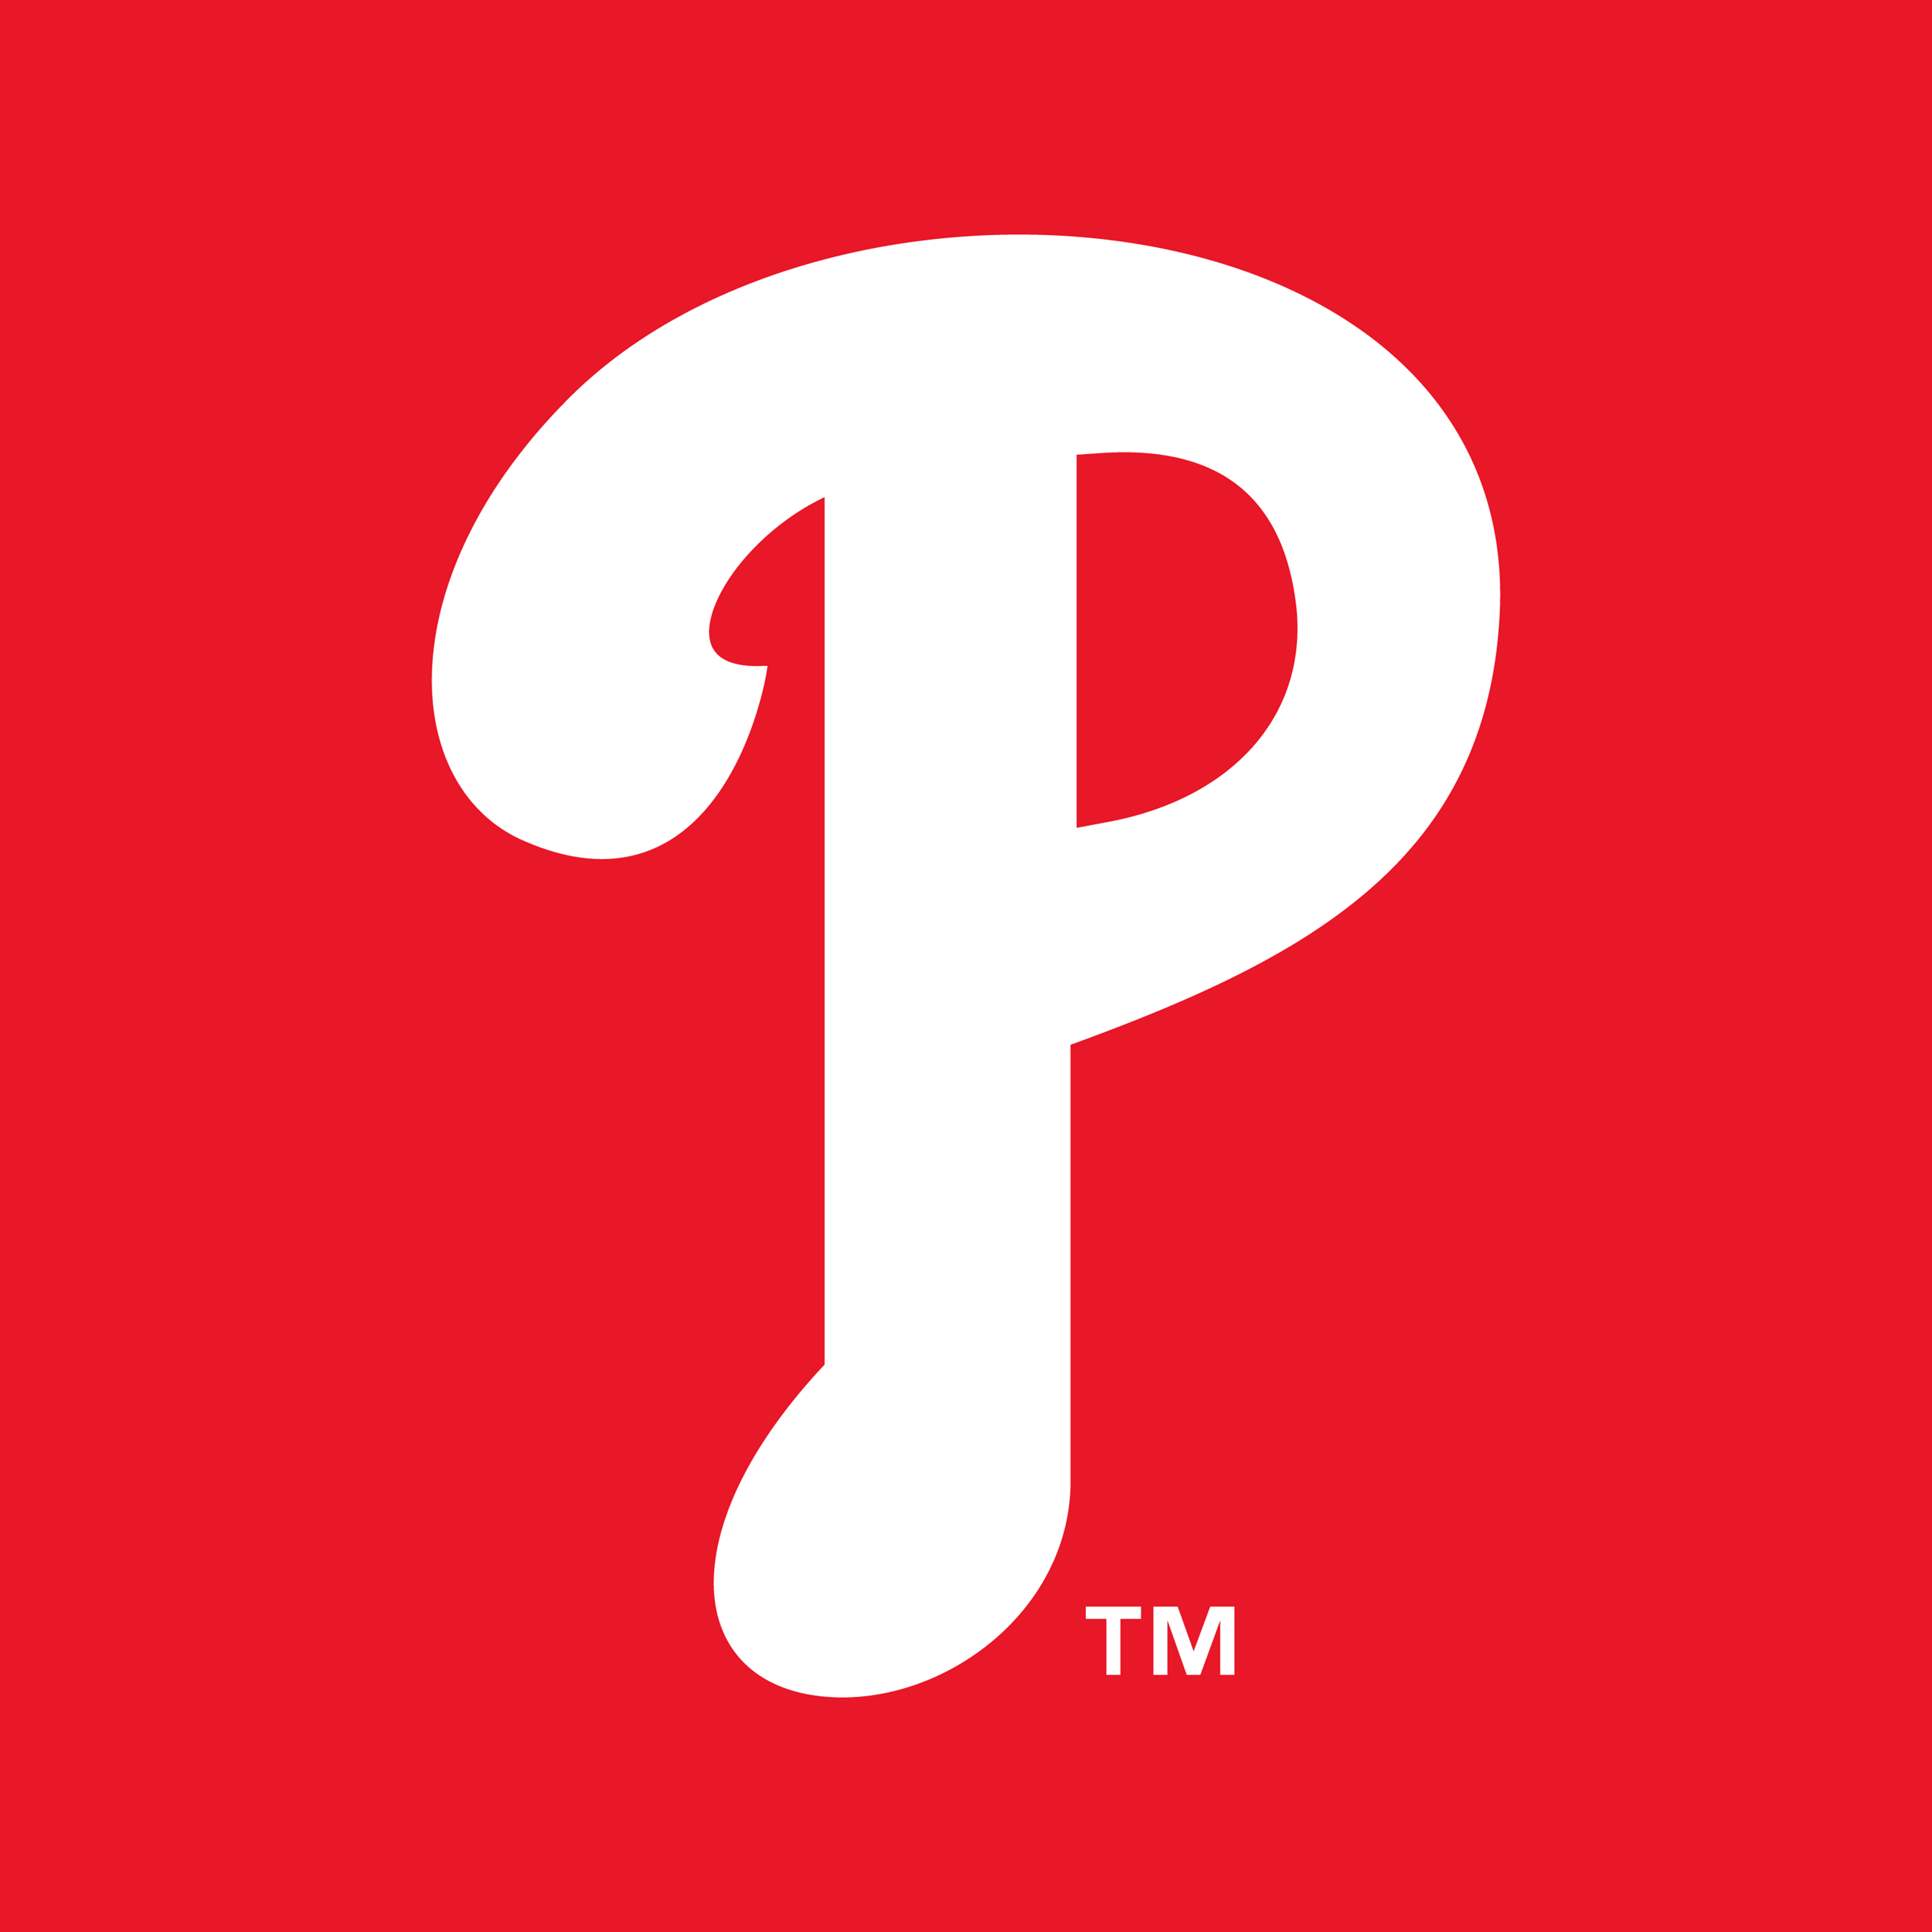 Large Red P Logo - Philadelphia Phillies Logo PNG Transparent & SVG Vector - Freebie Supply